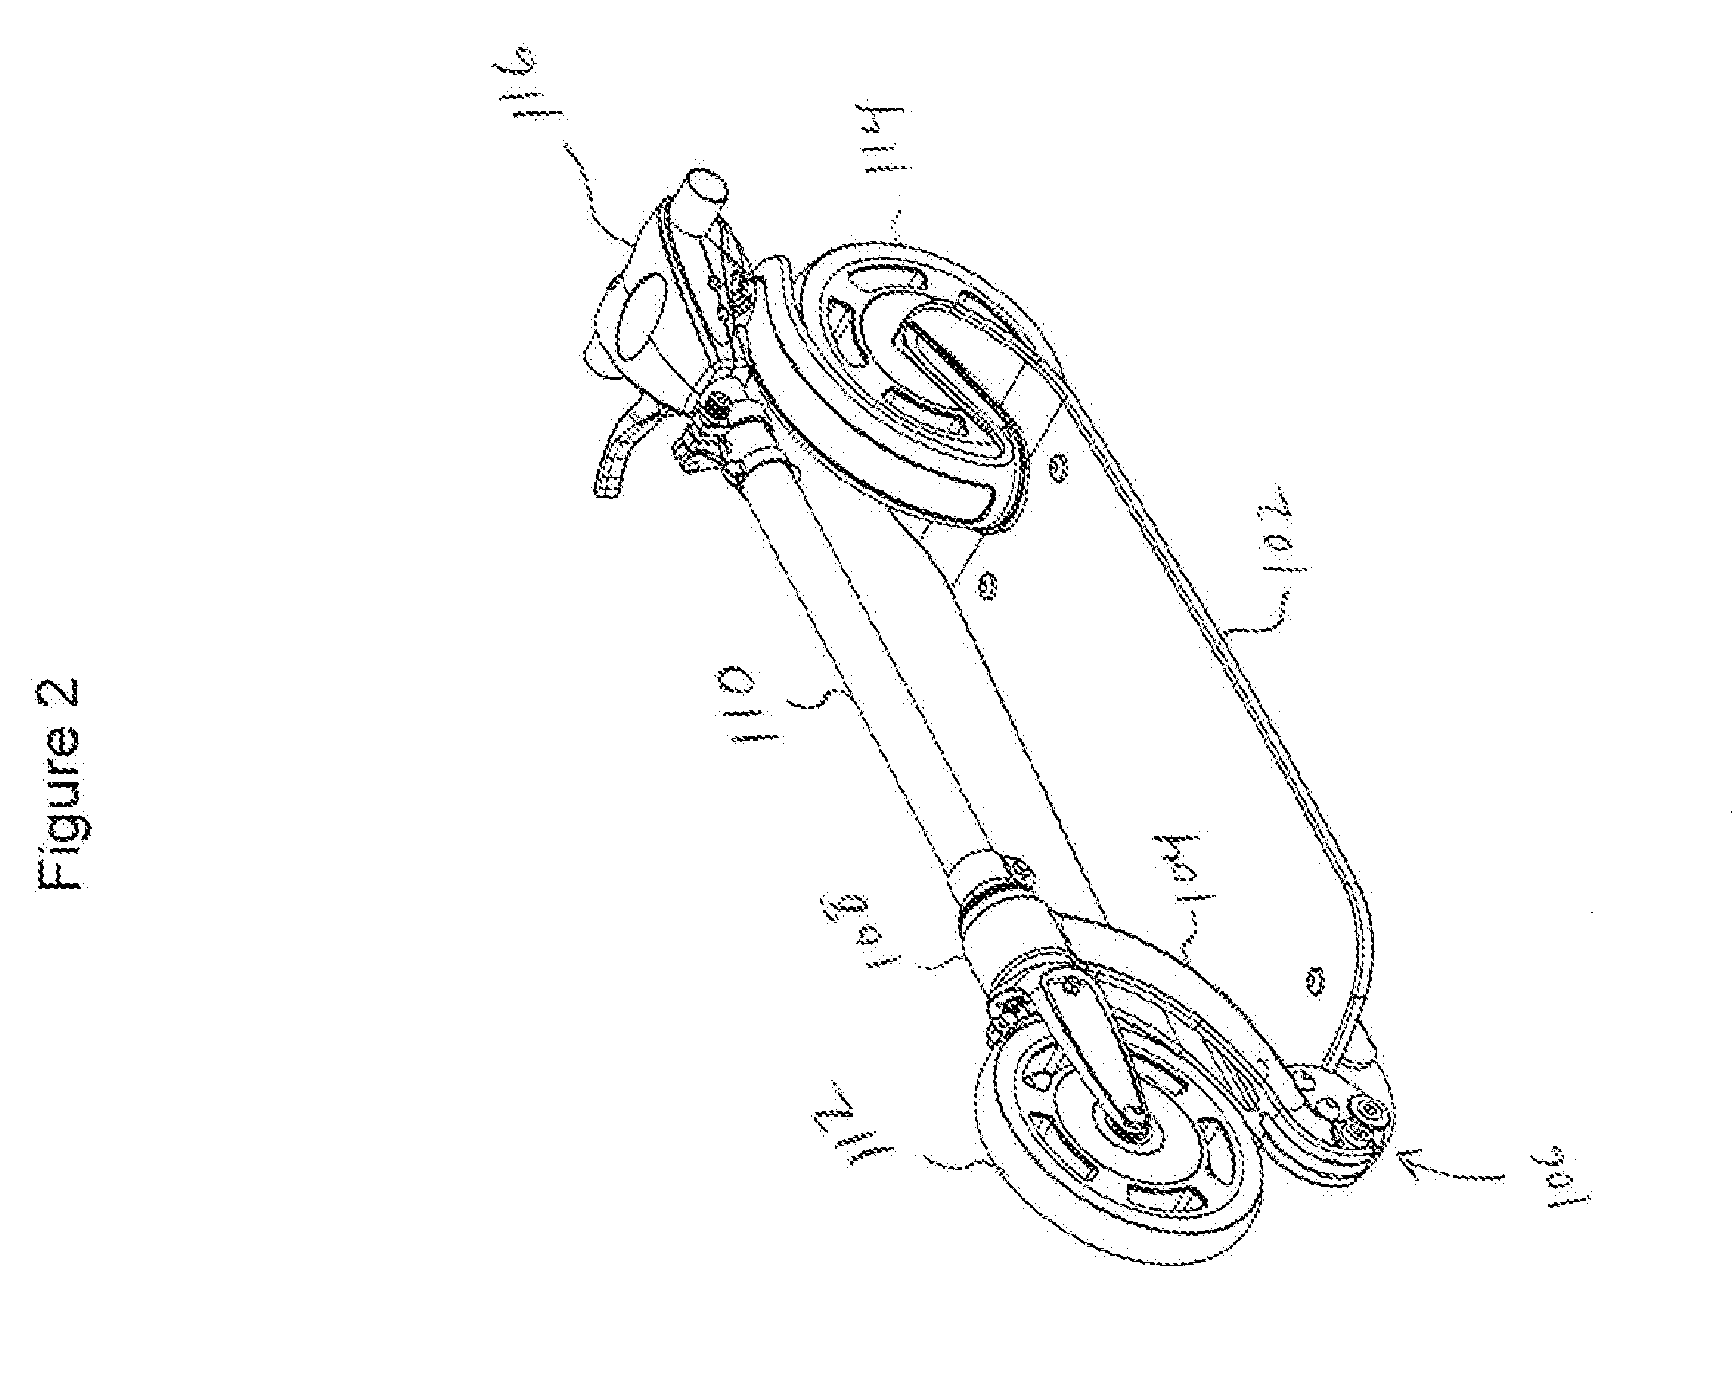 Folding scooter